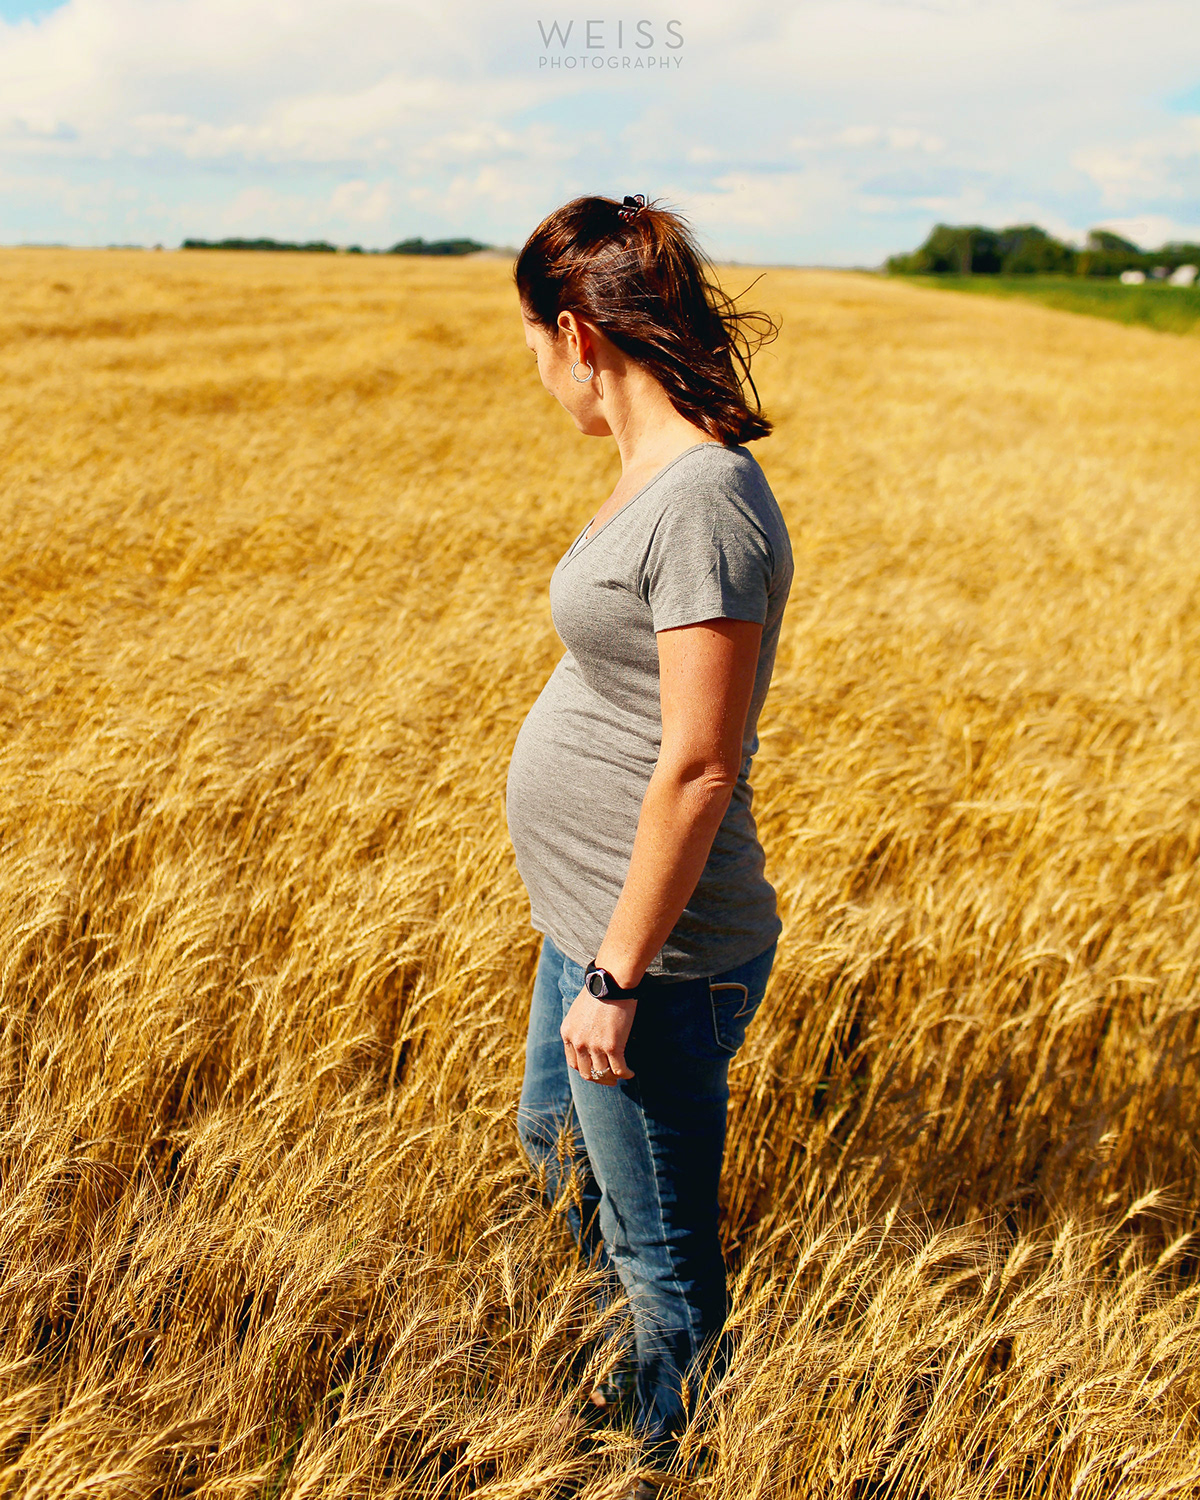 cara weiss Photograph cara weiss twin cities St Paul minneapolis minnesota photographer maternity maternity photoshoot outdoors wheat fields portrait